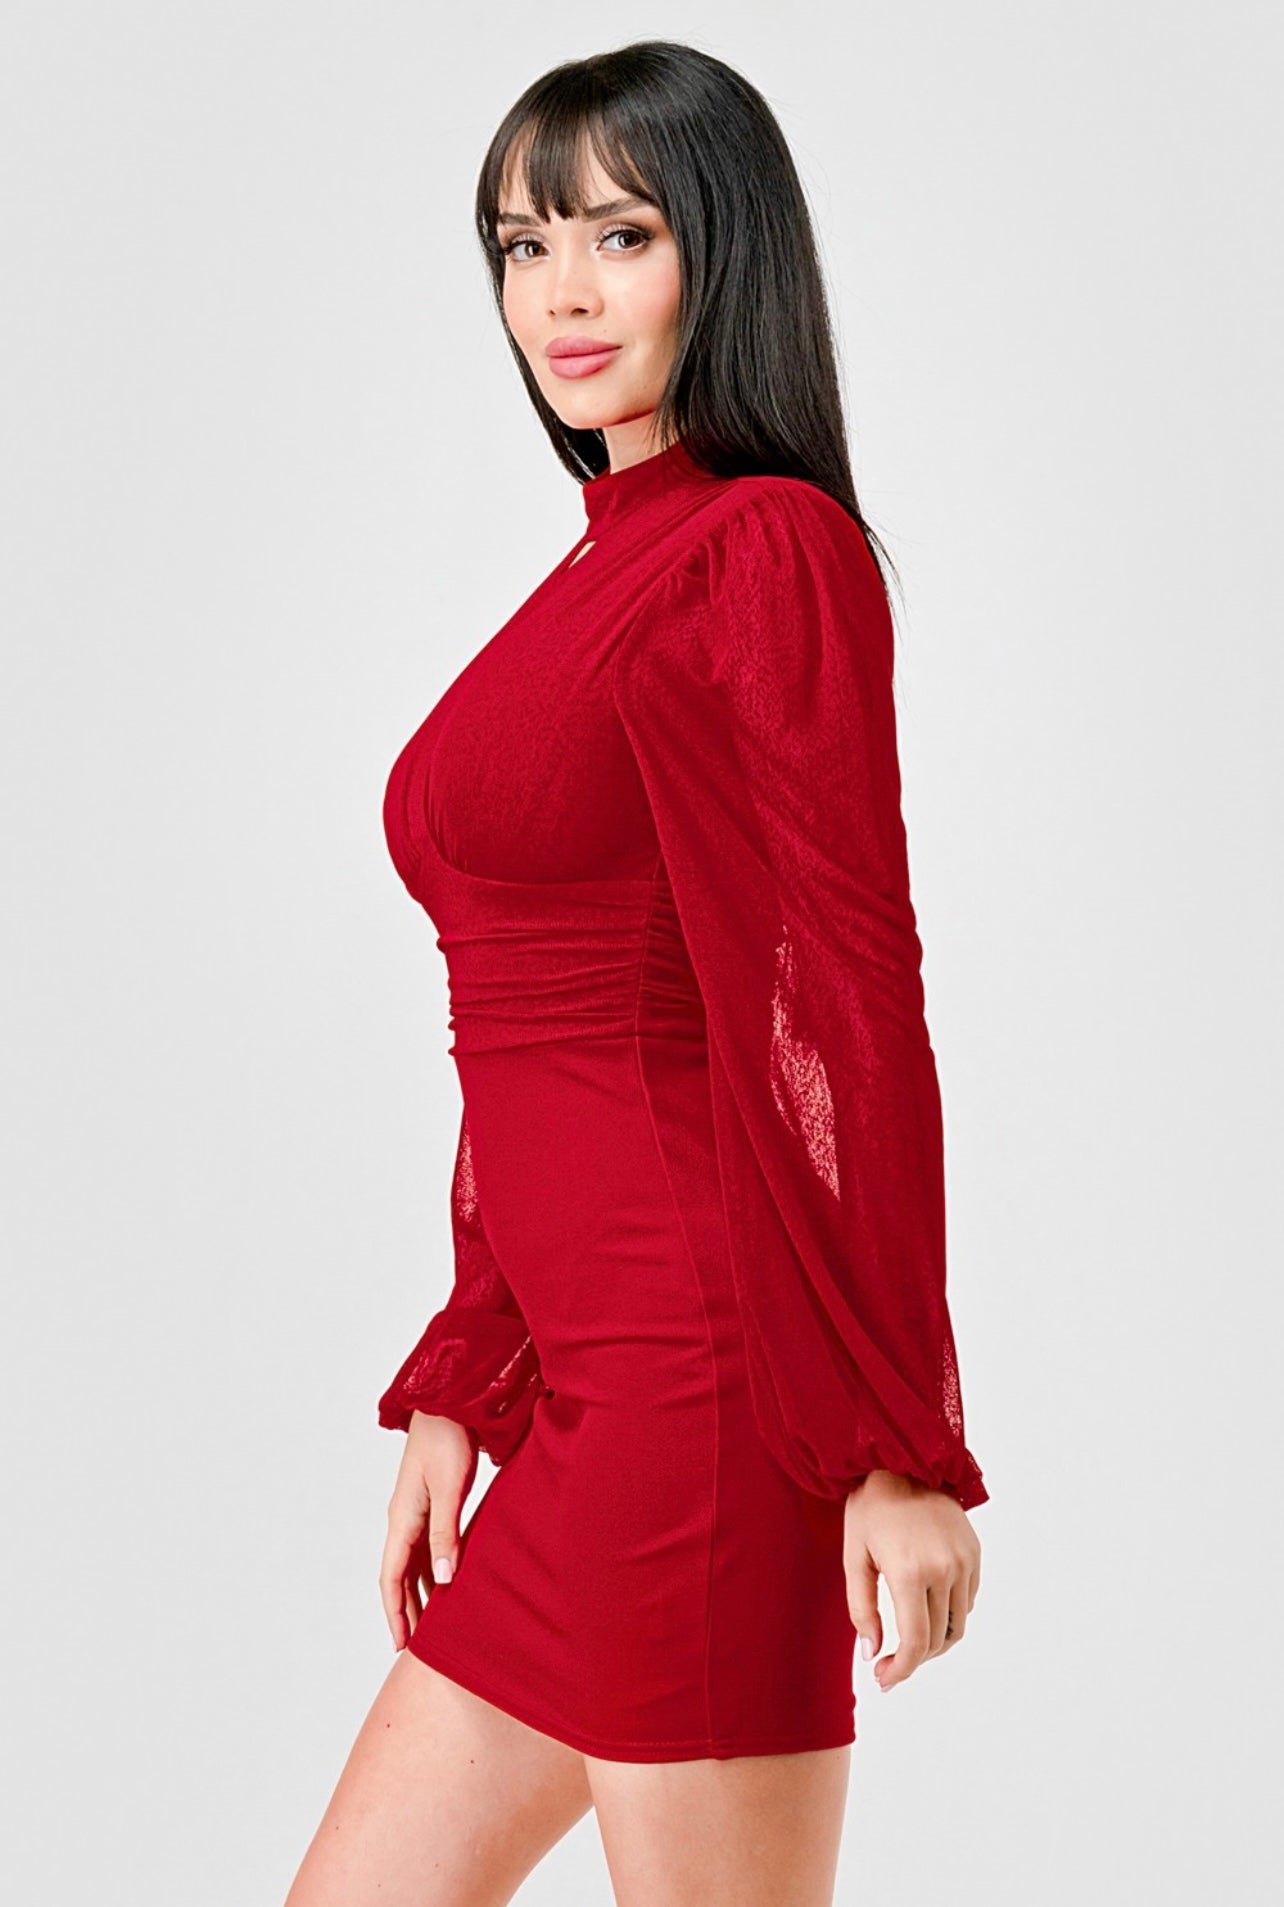 Scarlet Mini Dress (Red)